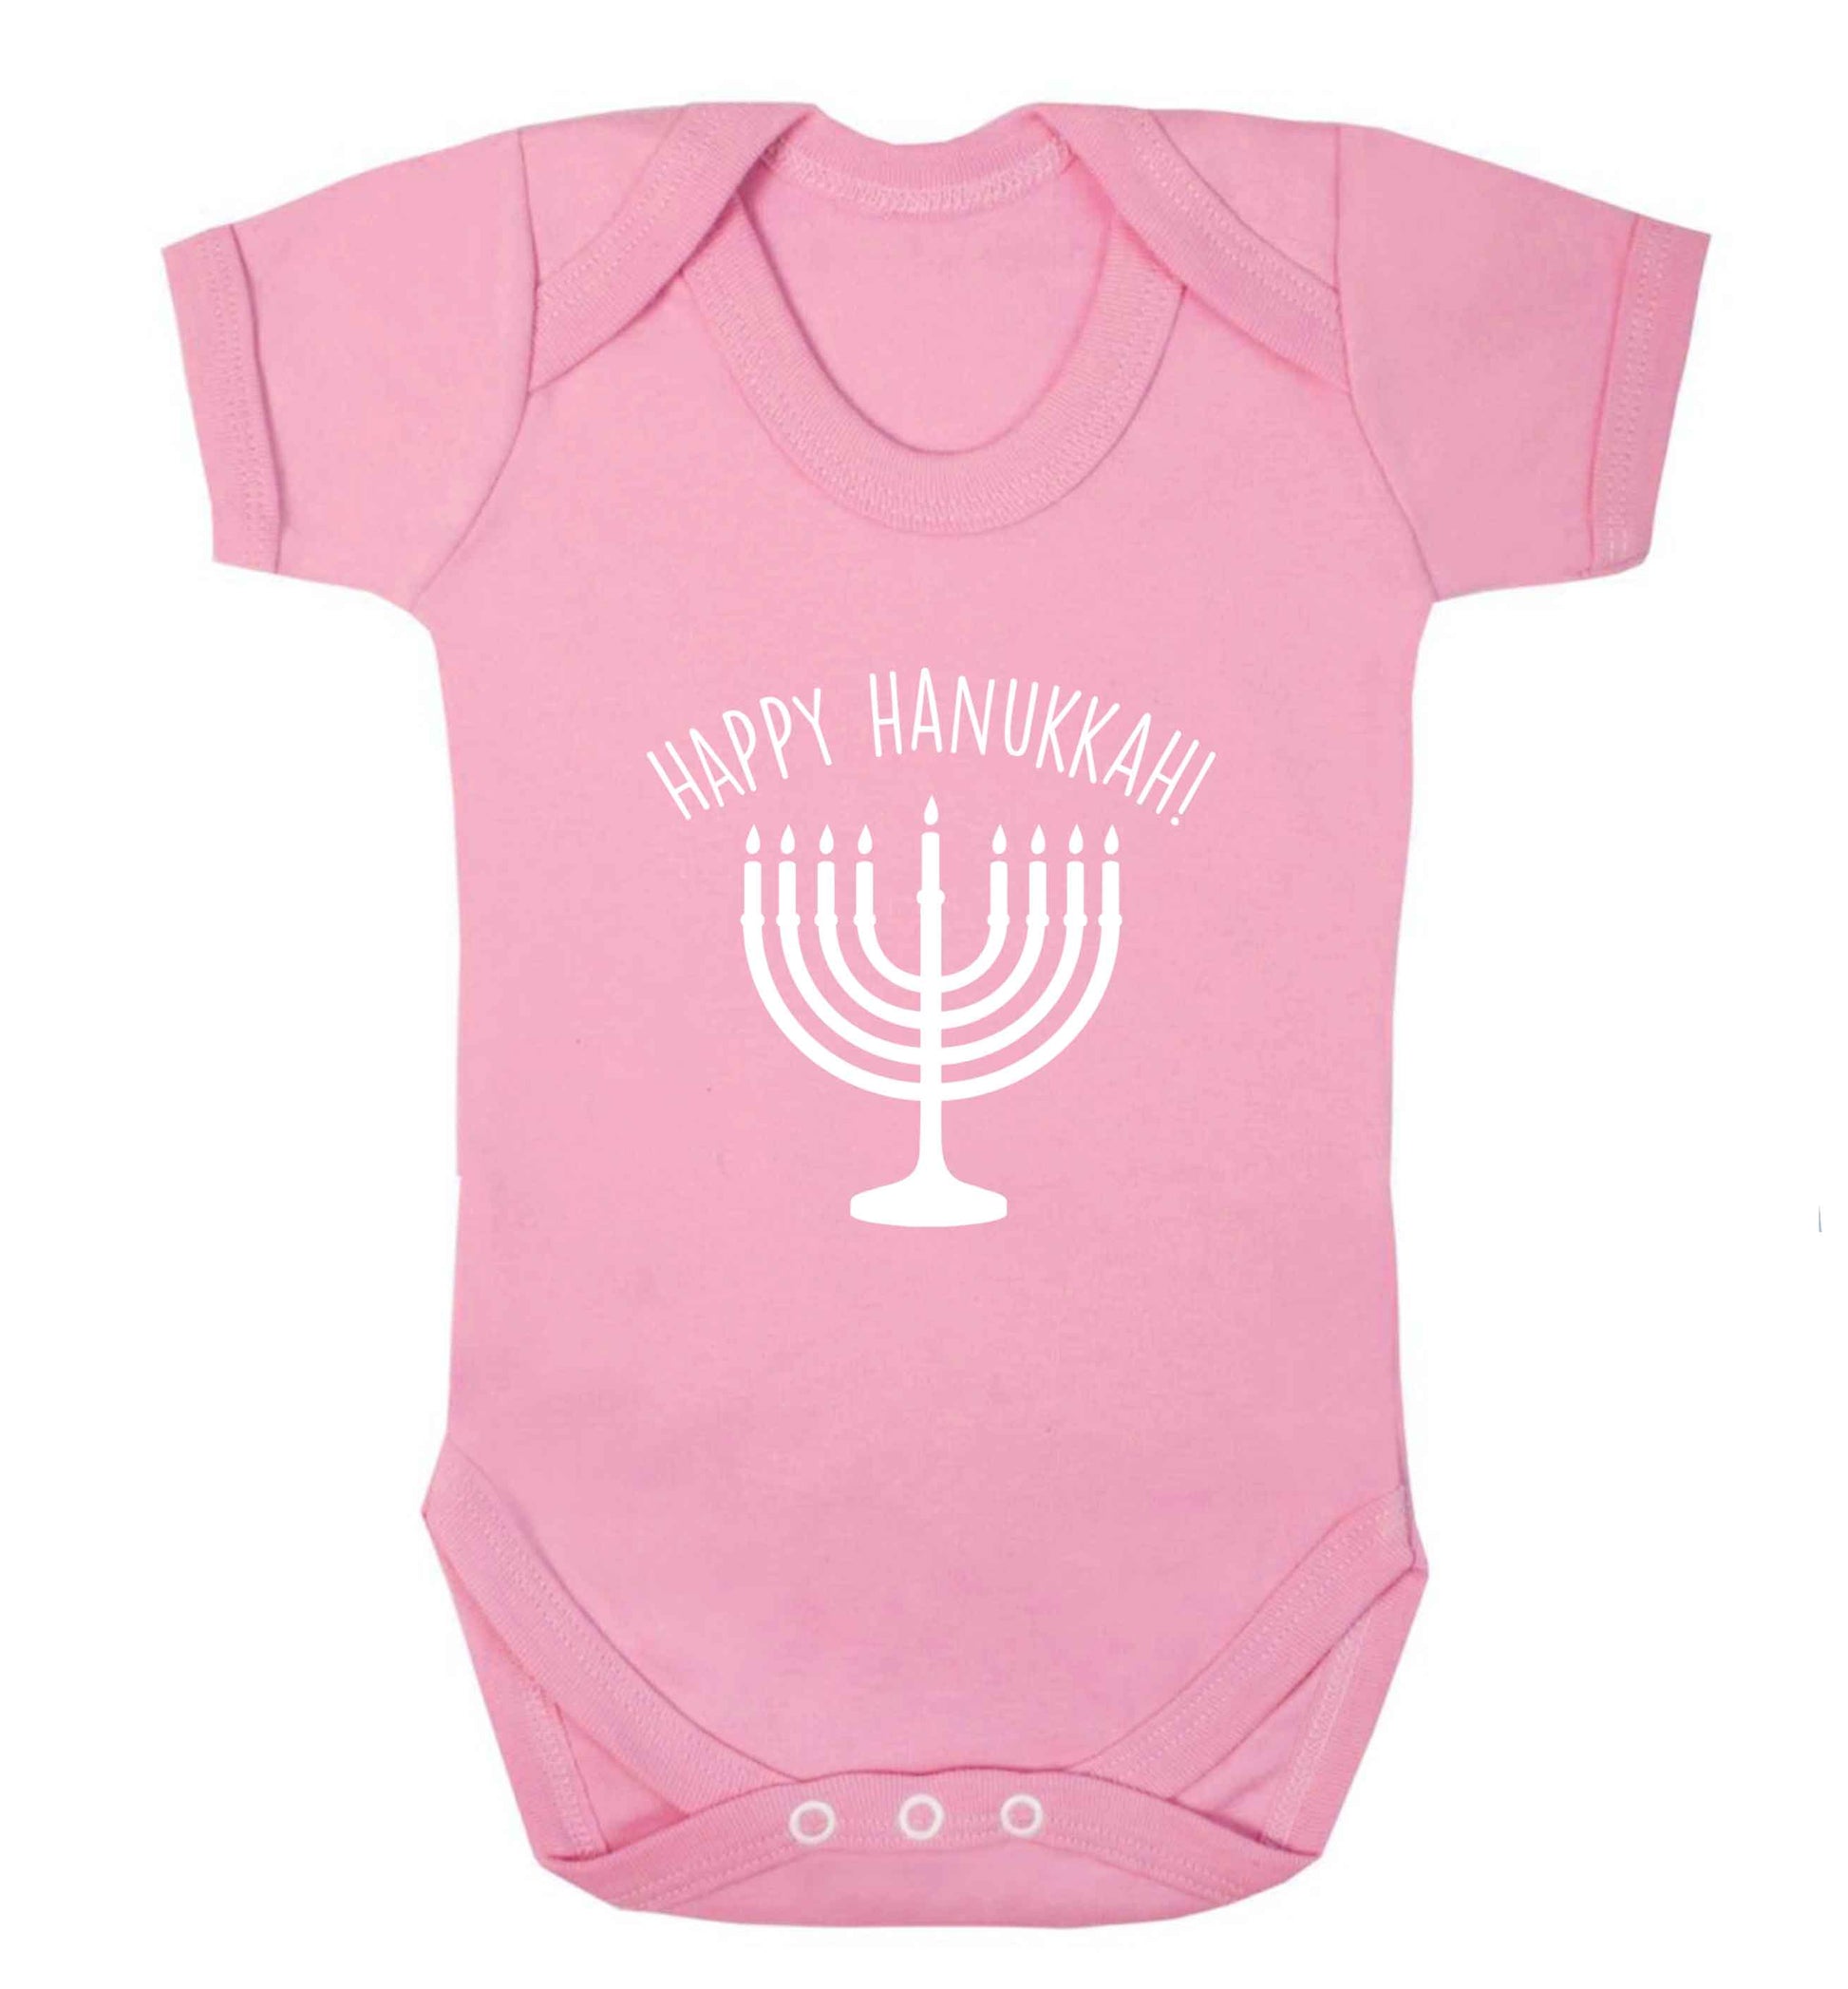 Happy hanukkah baby vest pale pink 18-24 months